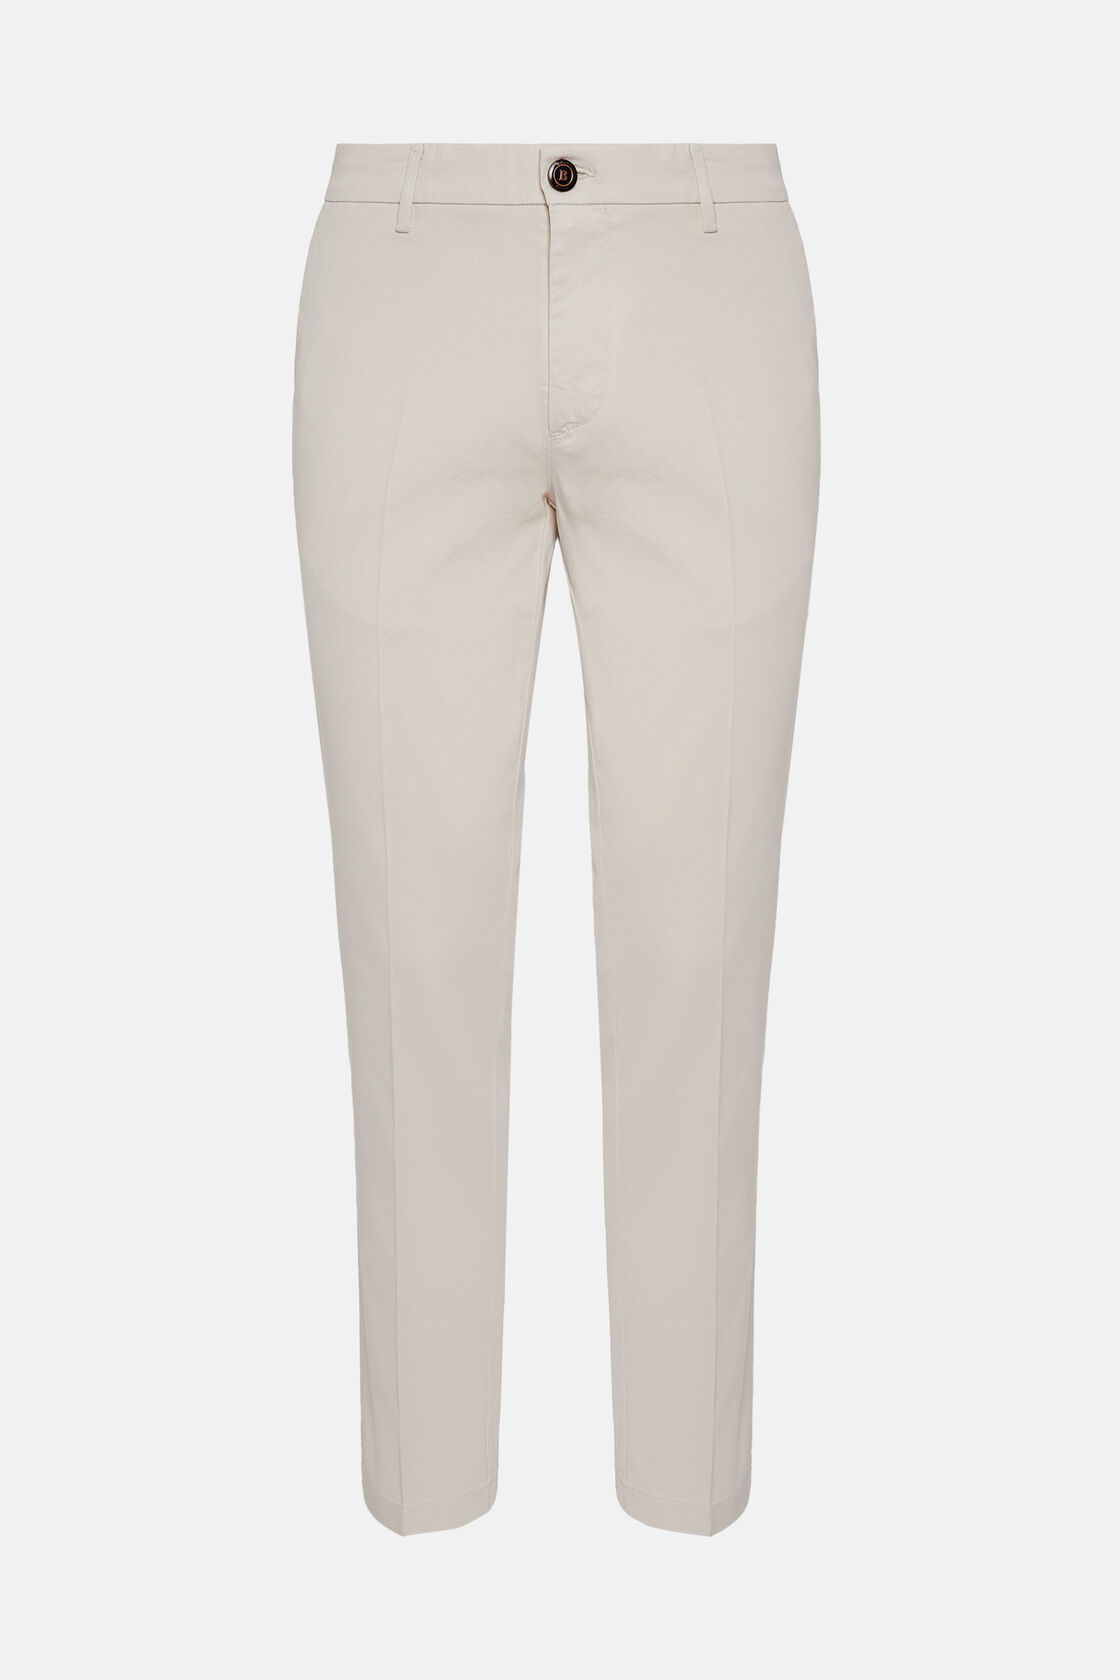 Stretch Cotton/Tencel Trousers, Cream, hi-res